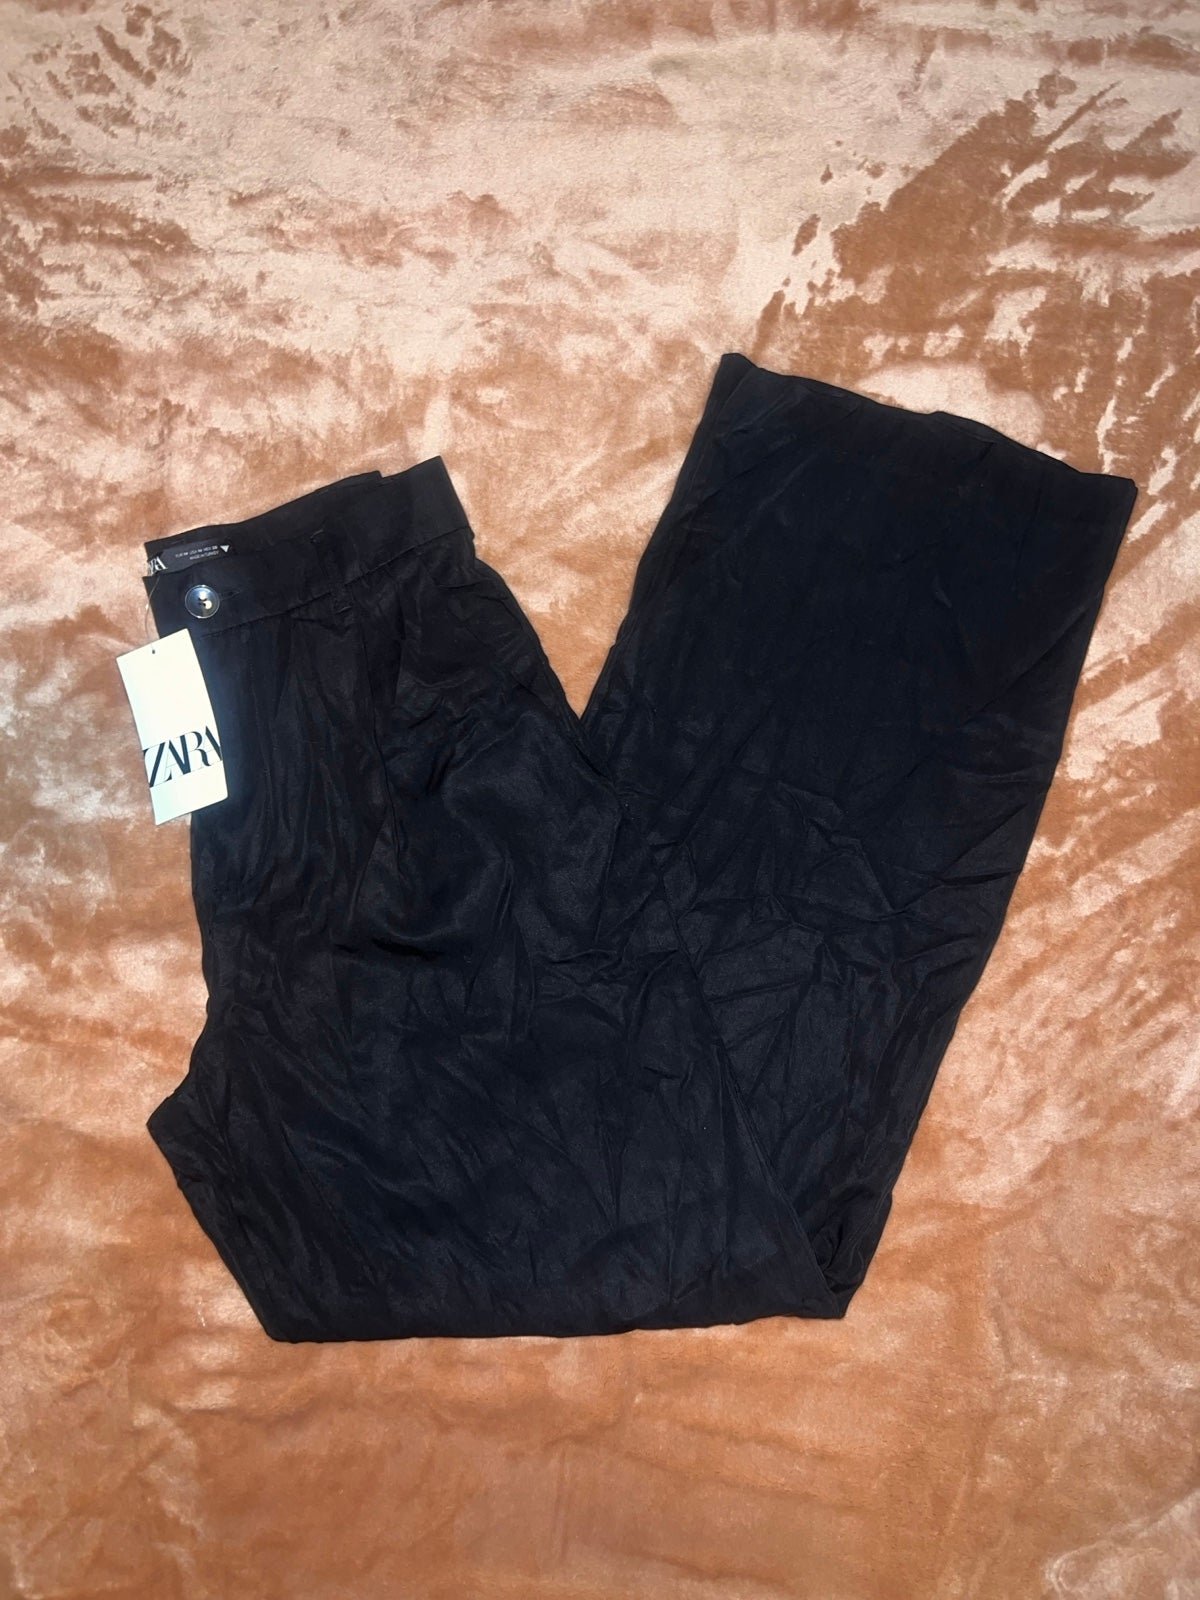 The Best Seller Zara High Waisted Black Pants NWT M oVQfAv1YO Cheap